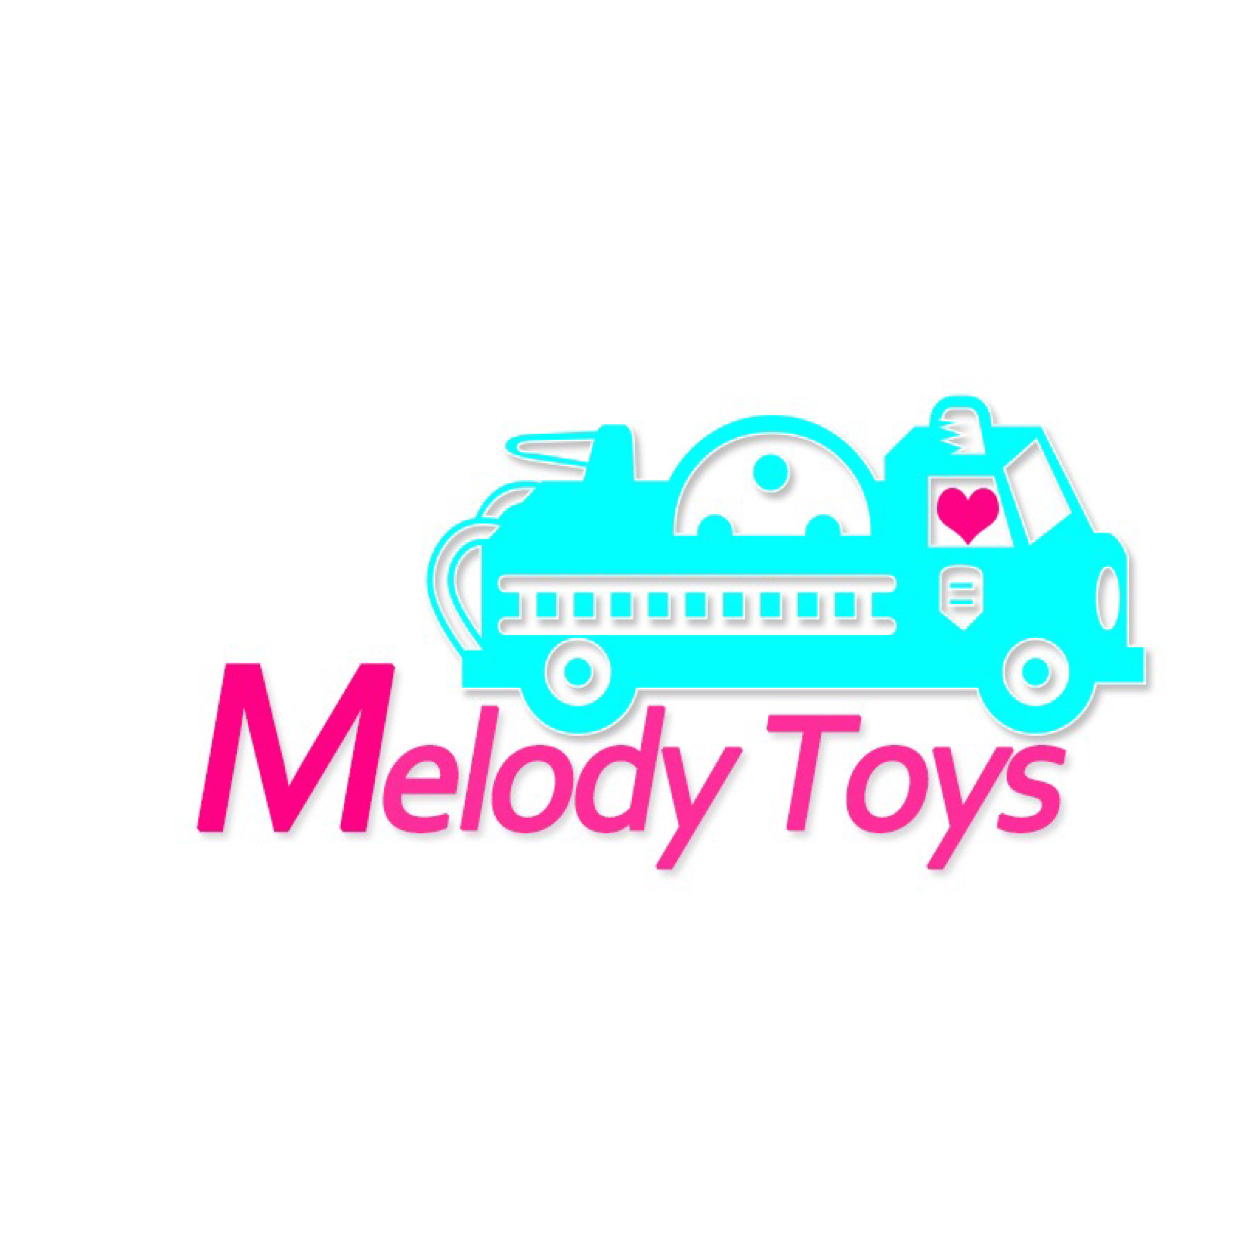 Melody Toys